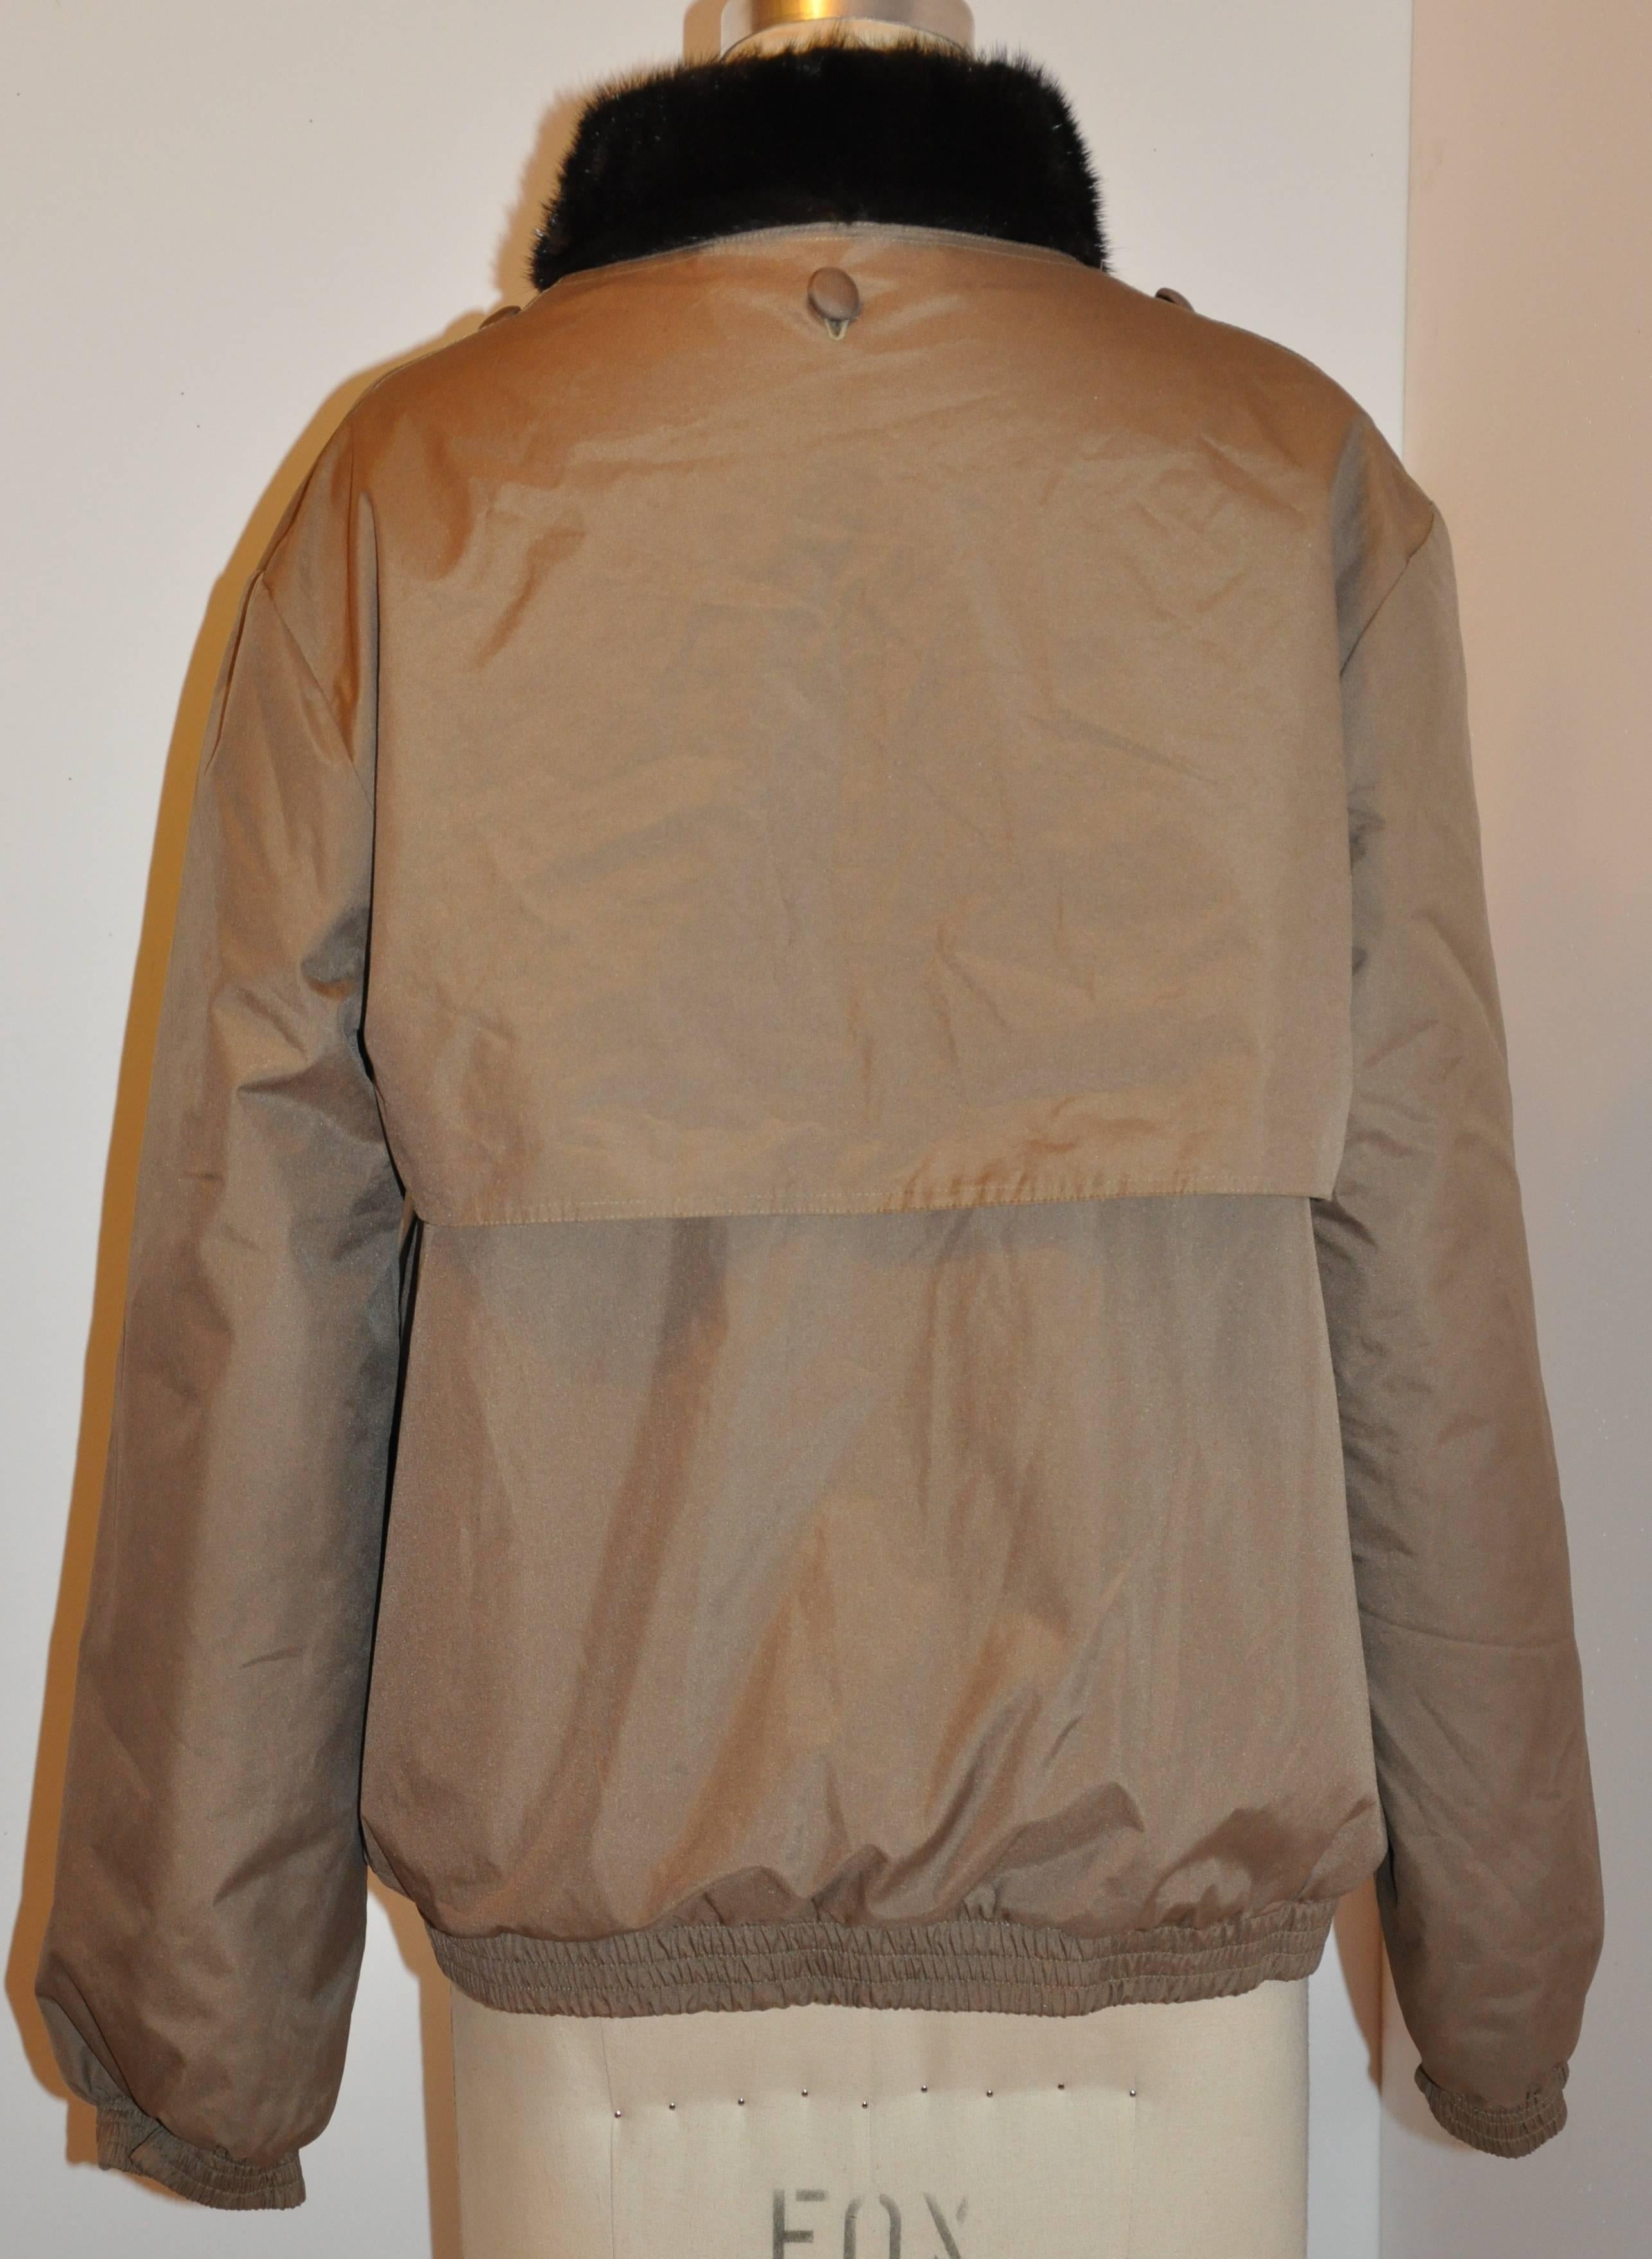 Women's or Men's Reversible Mink & Waterproof Zipper Vest with Removable Mink Lined Sleeves For Sale